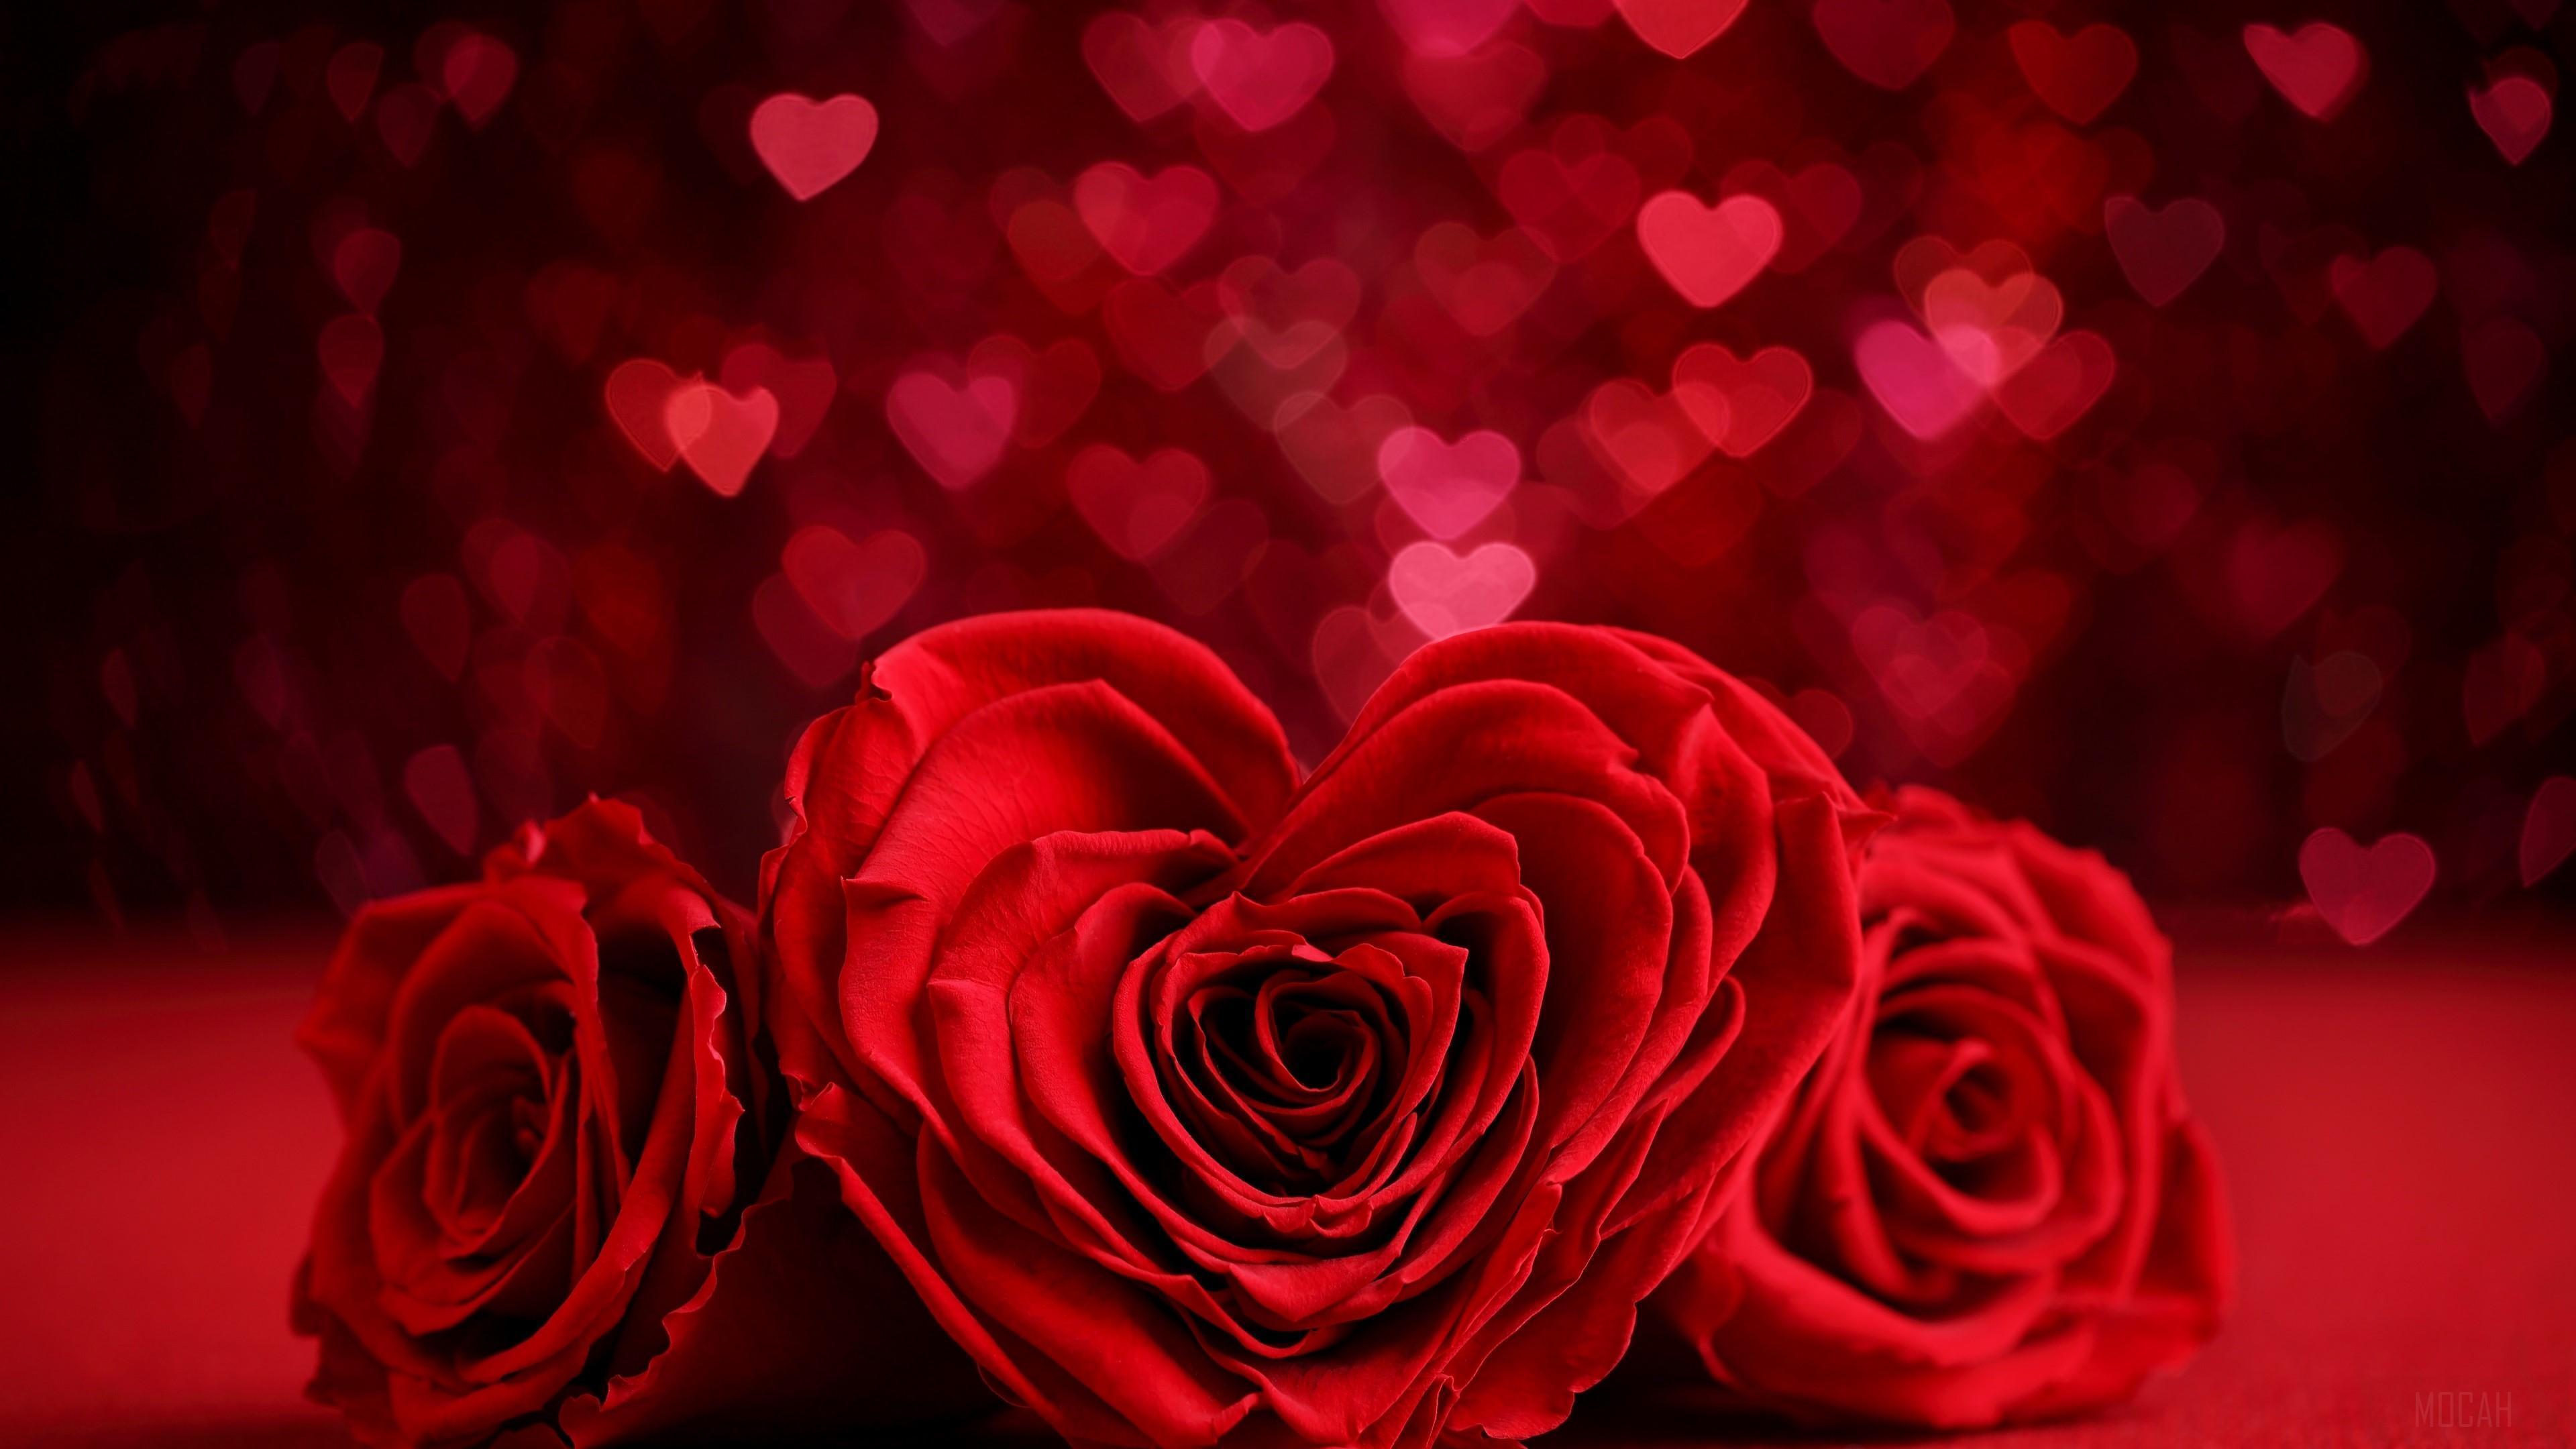 HD wallpaper, Red Flower, Romantic, Red Rose, Bokeh, Rose, Valentines Day 4K, Heart Shaped, Red, Flower